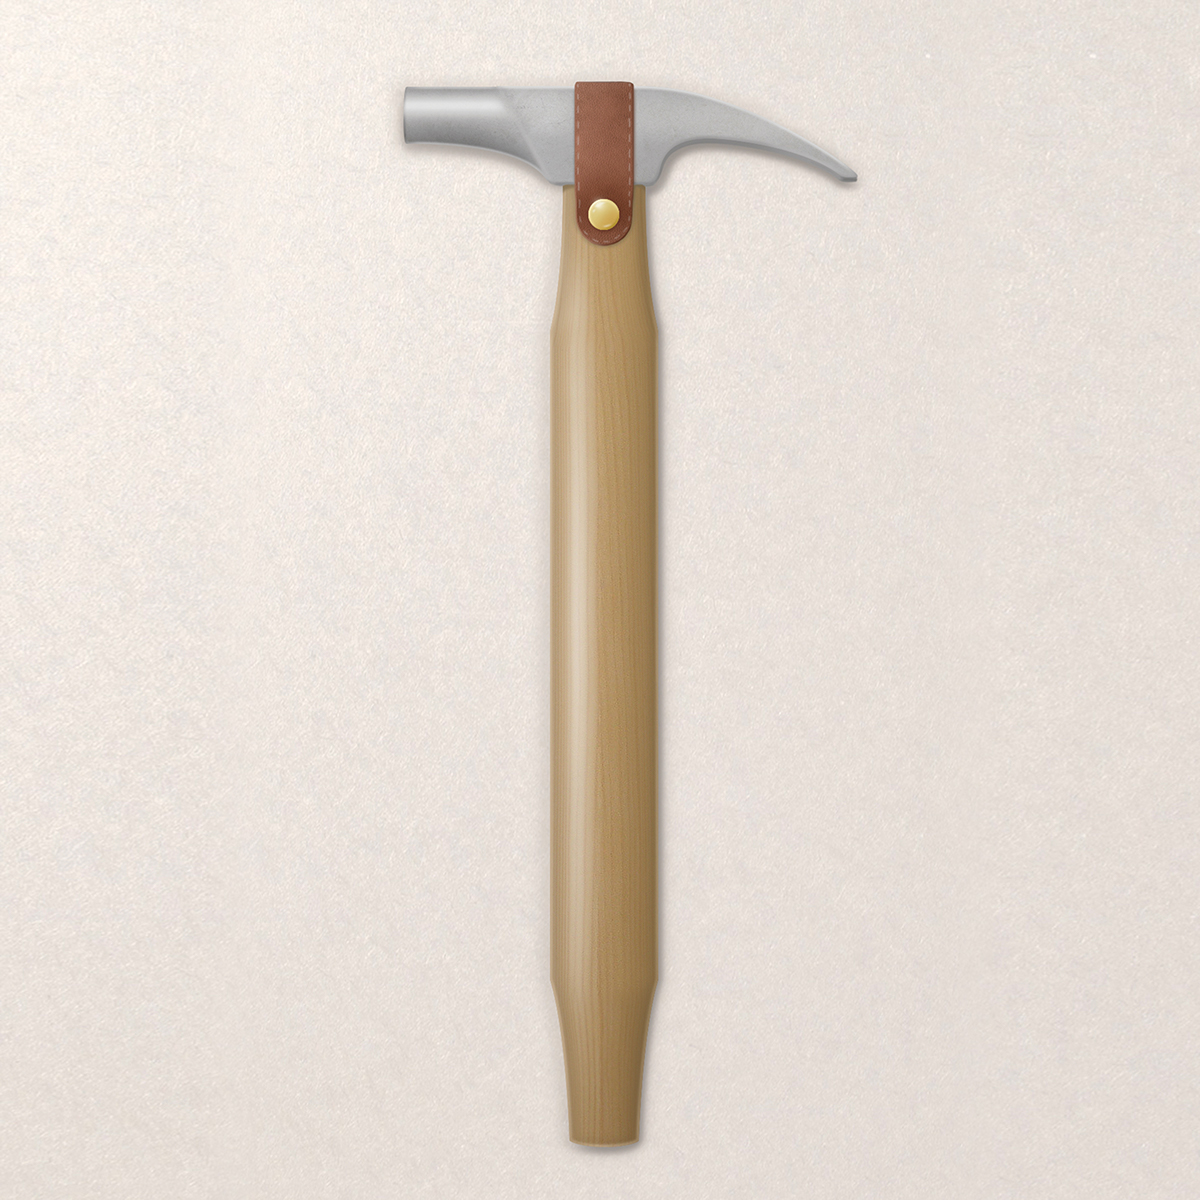 tools Render photoshop design hammer tool sketch